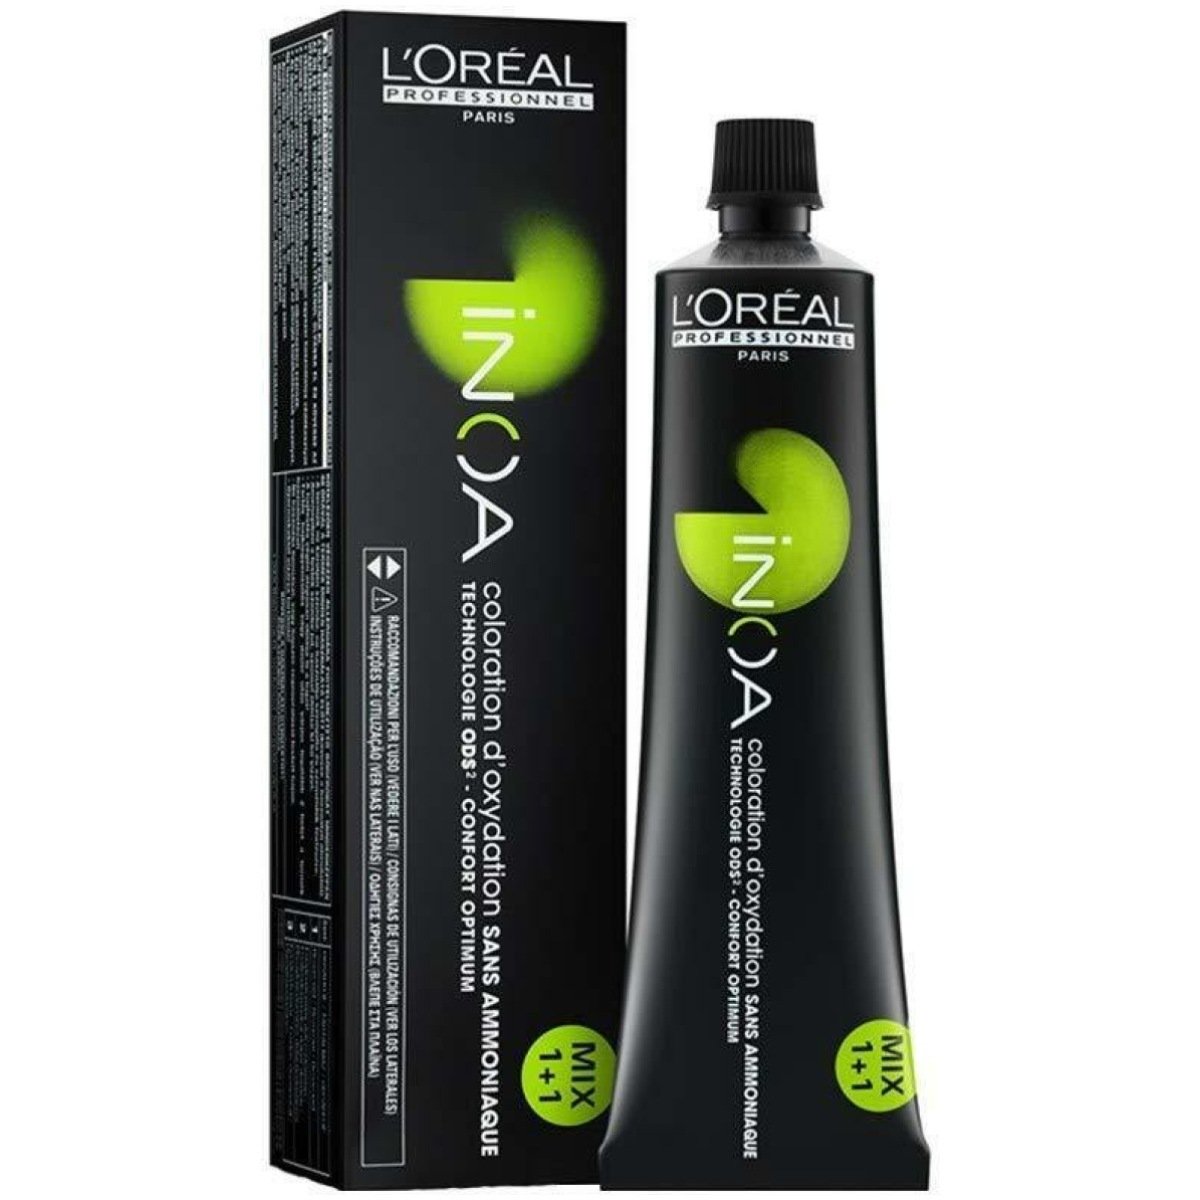 L’Oreal Inoa Hair Color 60G 3.0 Dark Brown +Developer 1000ml Combo